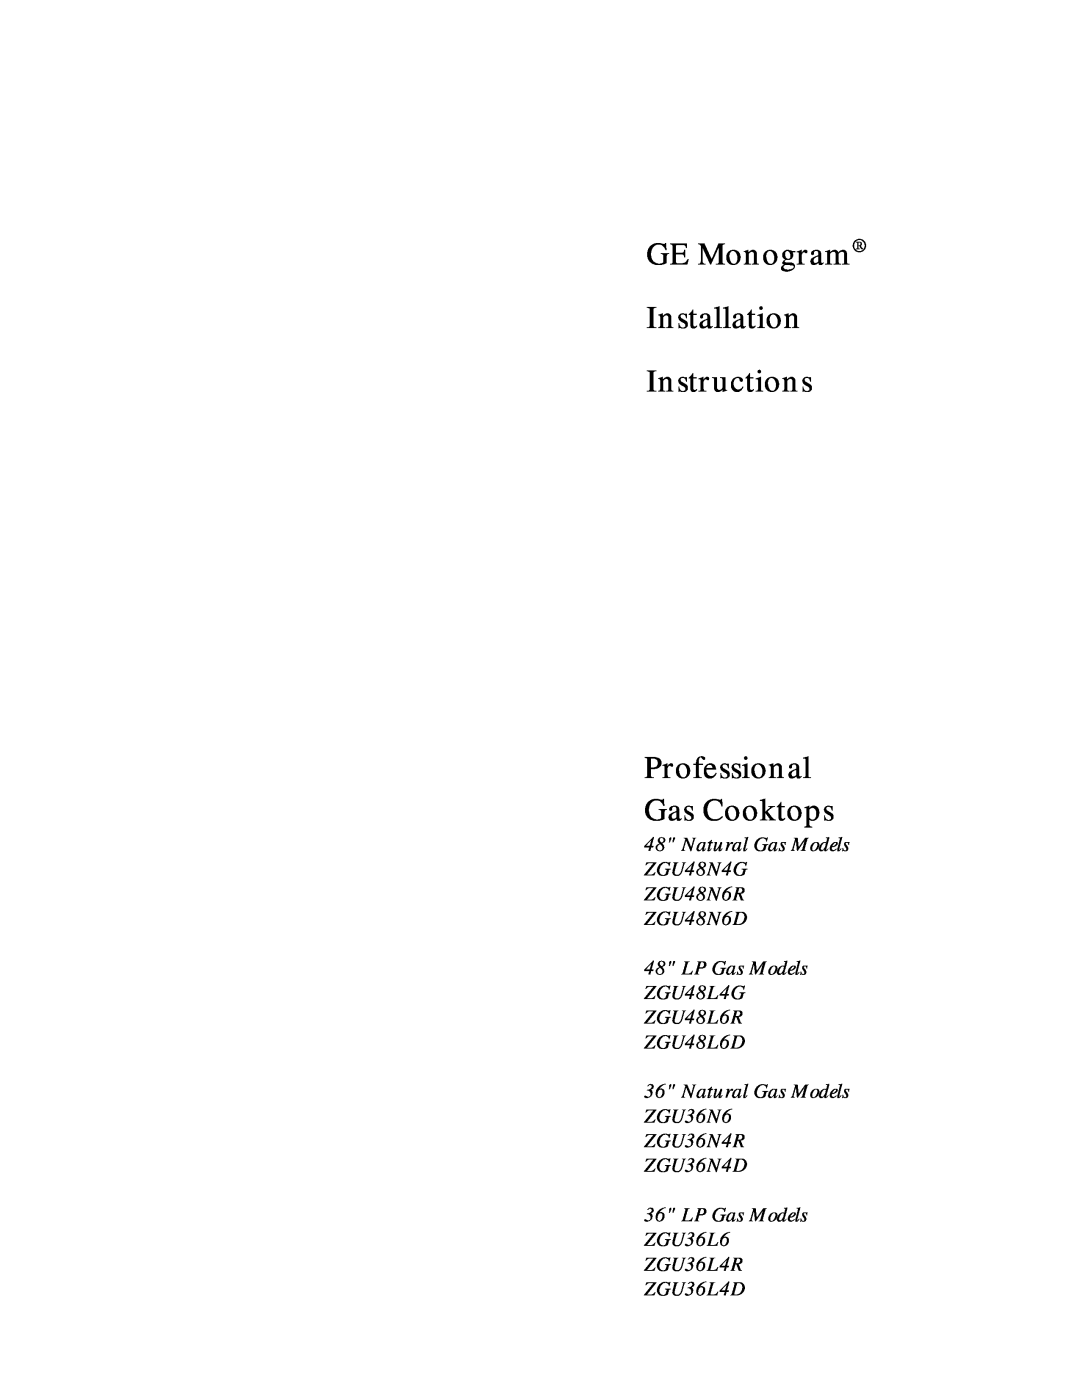 GE Monogram ZGU36L6D, ZGU48L4D installation instructions GE Monogram Installation Instructions Professional Gas Cooktops 